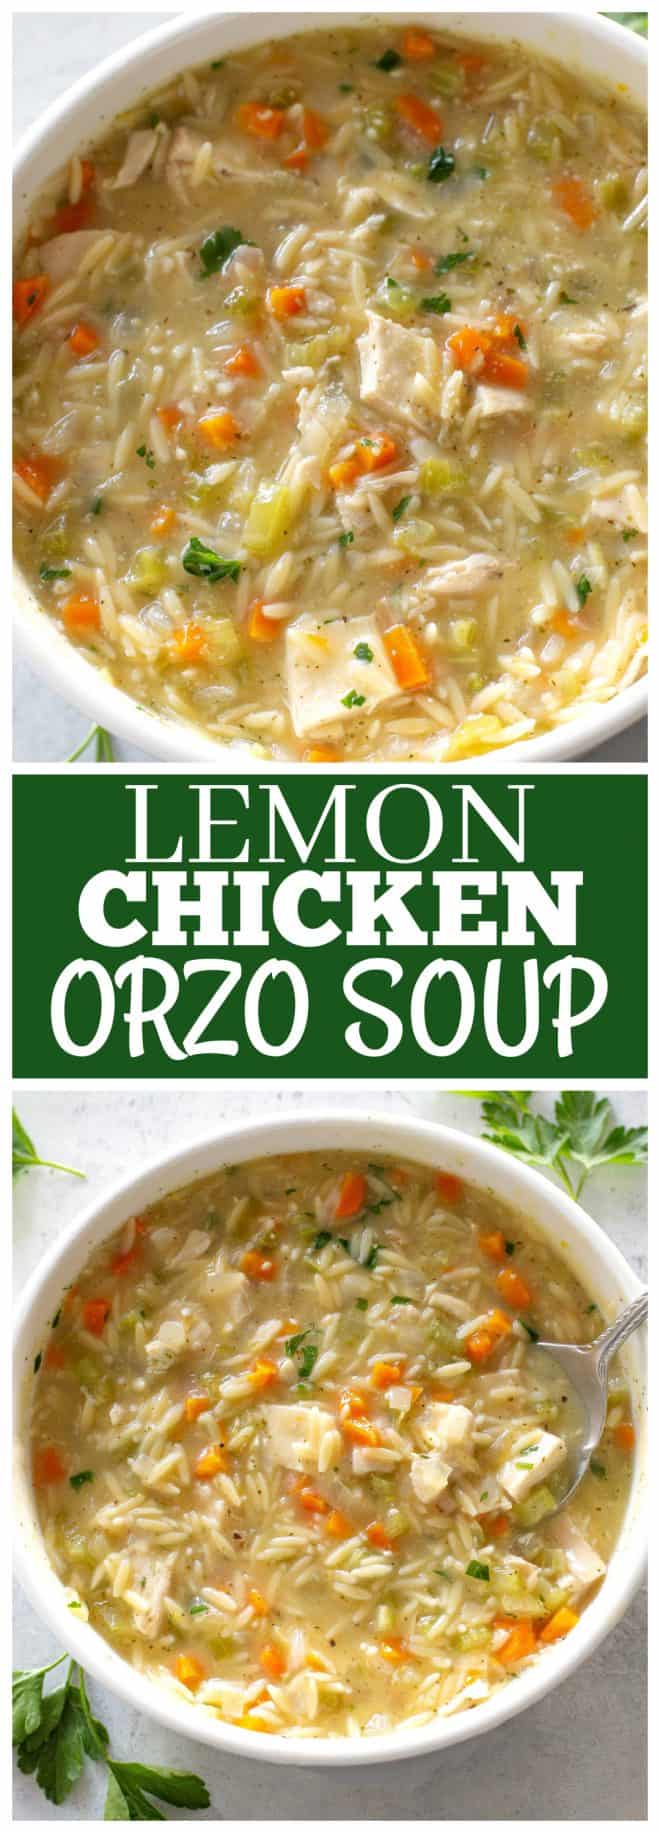 Lemon chicken orzo soup